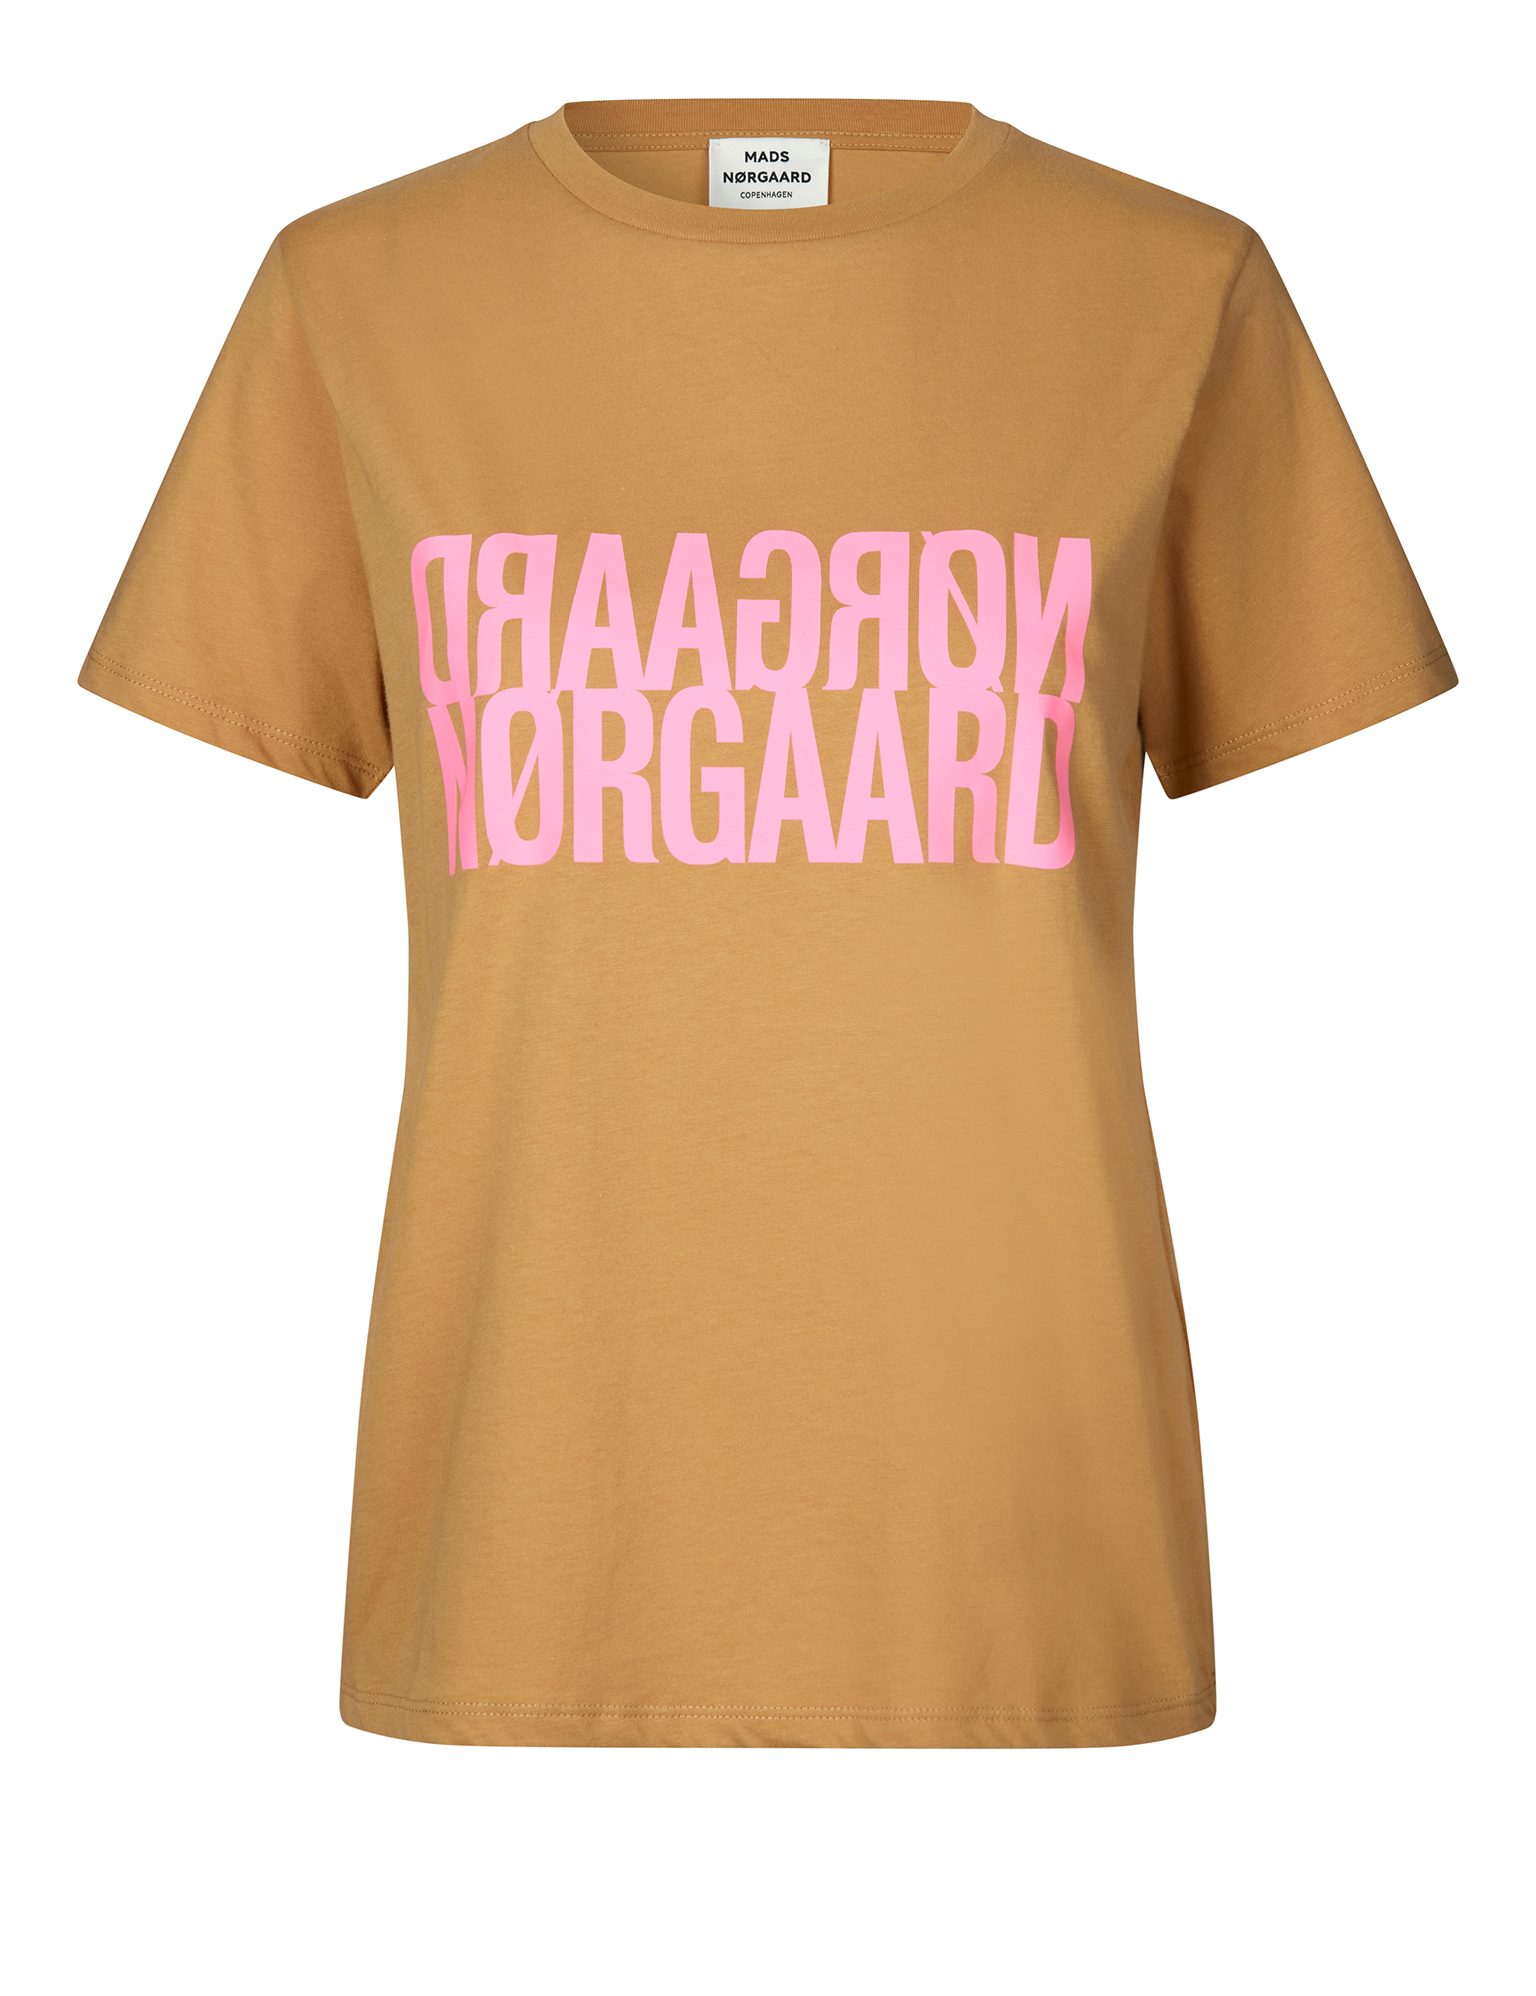 Single Organic Trenda P T-shirt